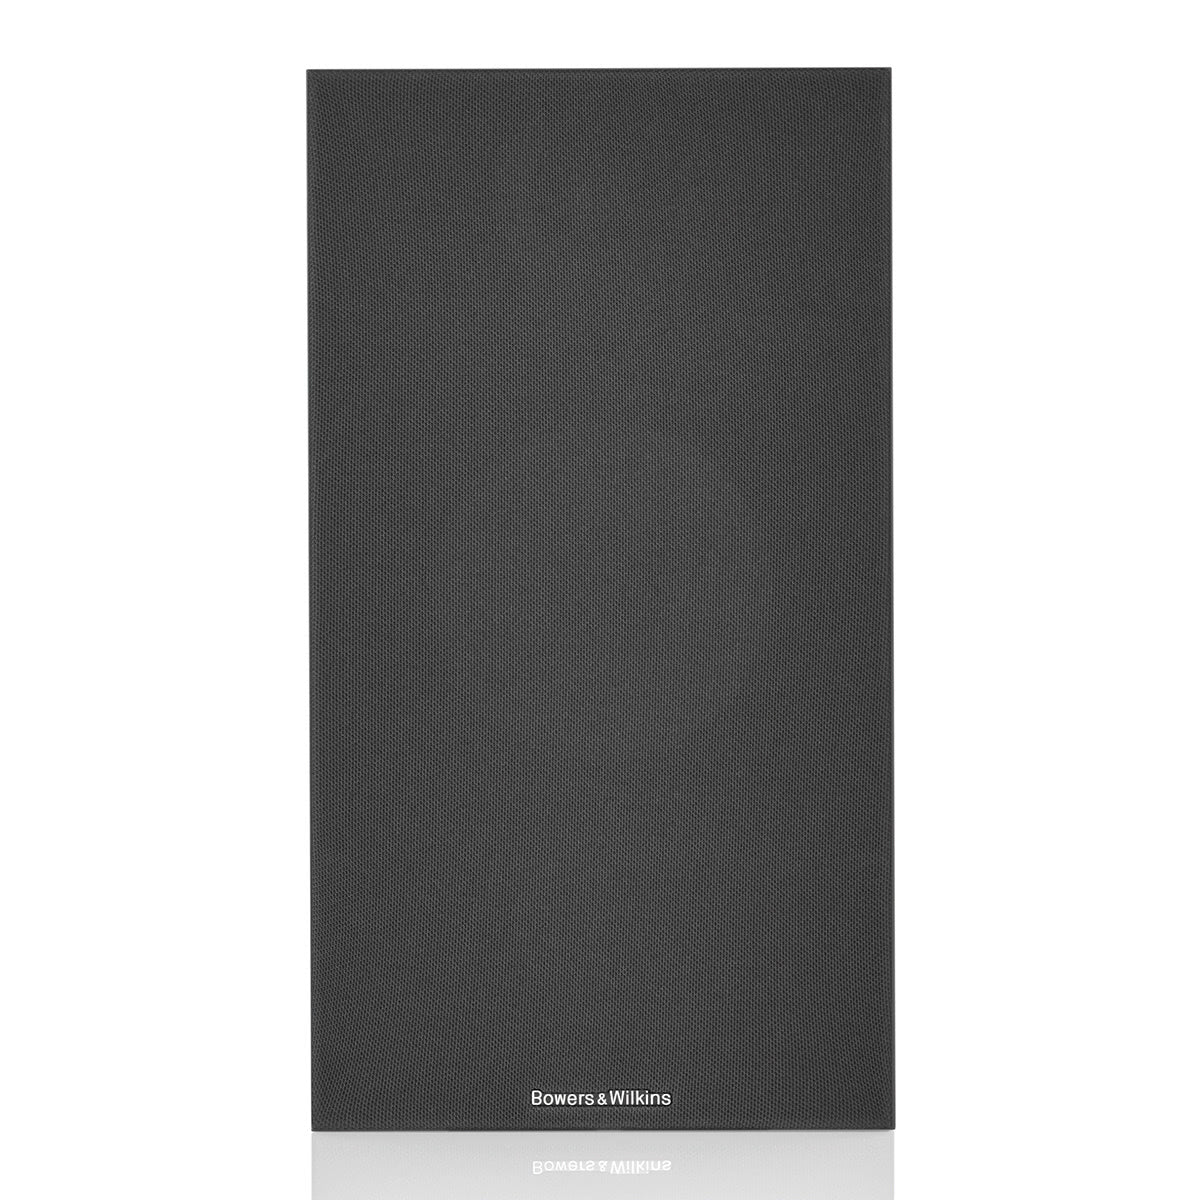 Bowers & Wilkins 606 S2 Anniversary Edition Bookshelf Speakers - Pair (Black)